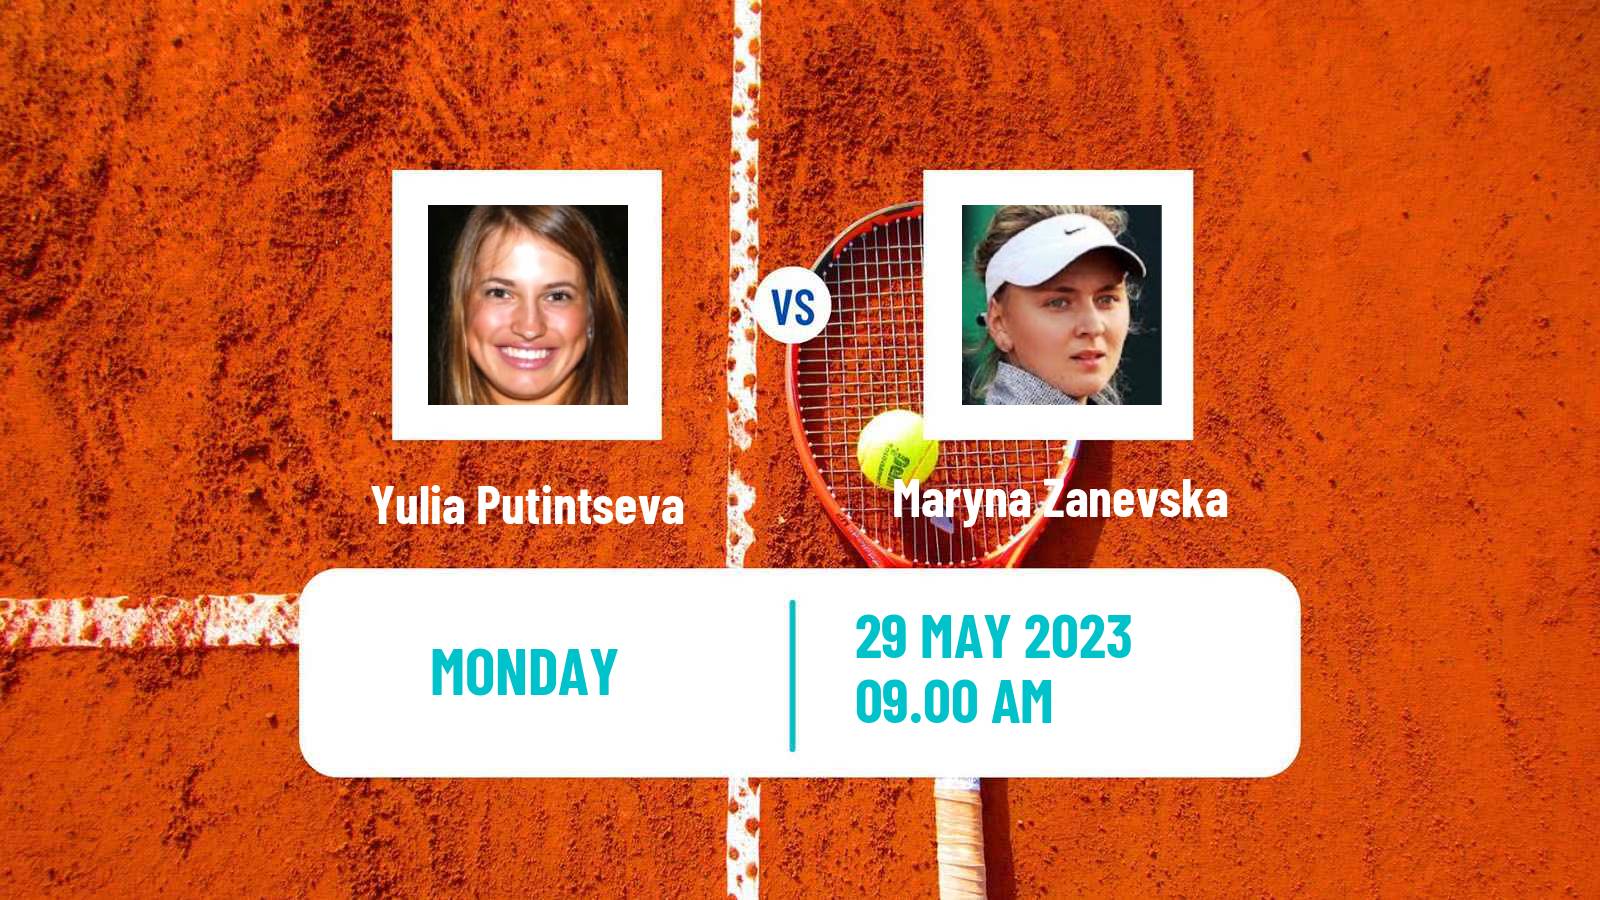 Tennis WTA Roland Garros Yulia Putintseva - Maryna Zanevska